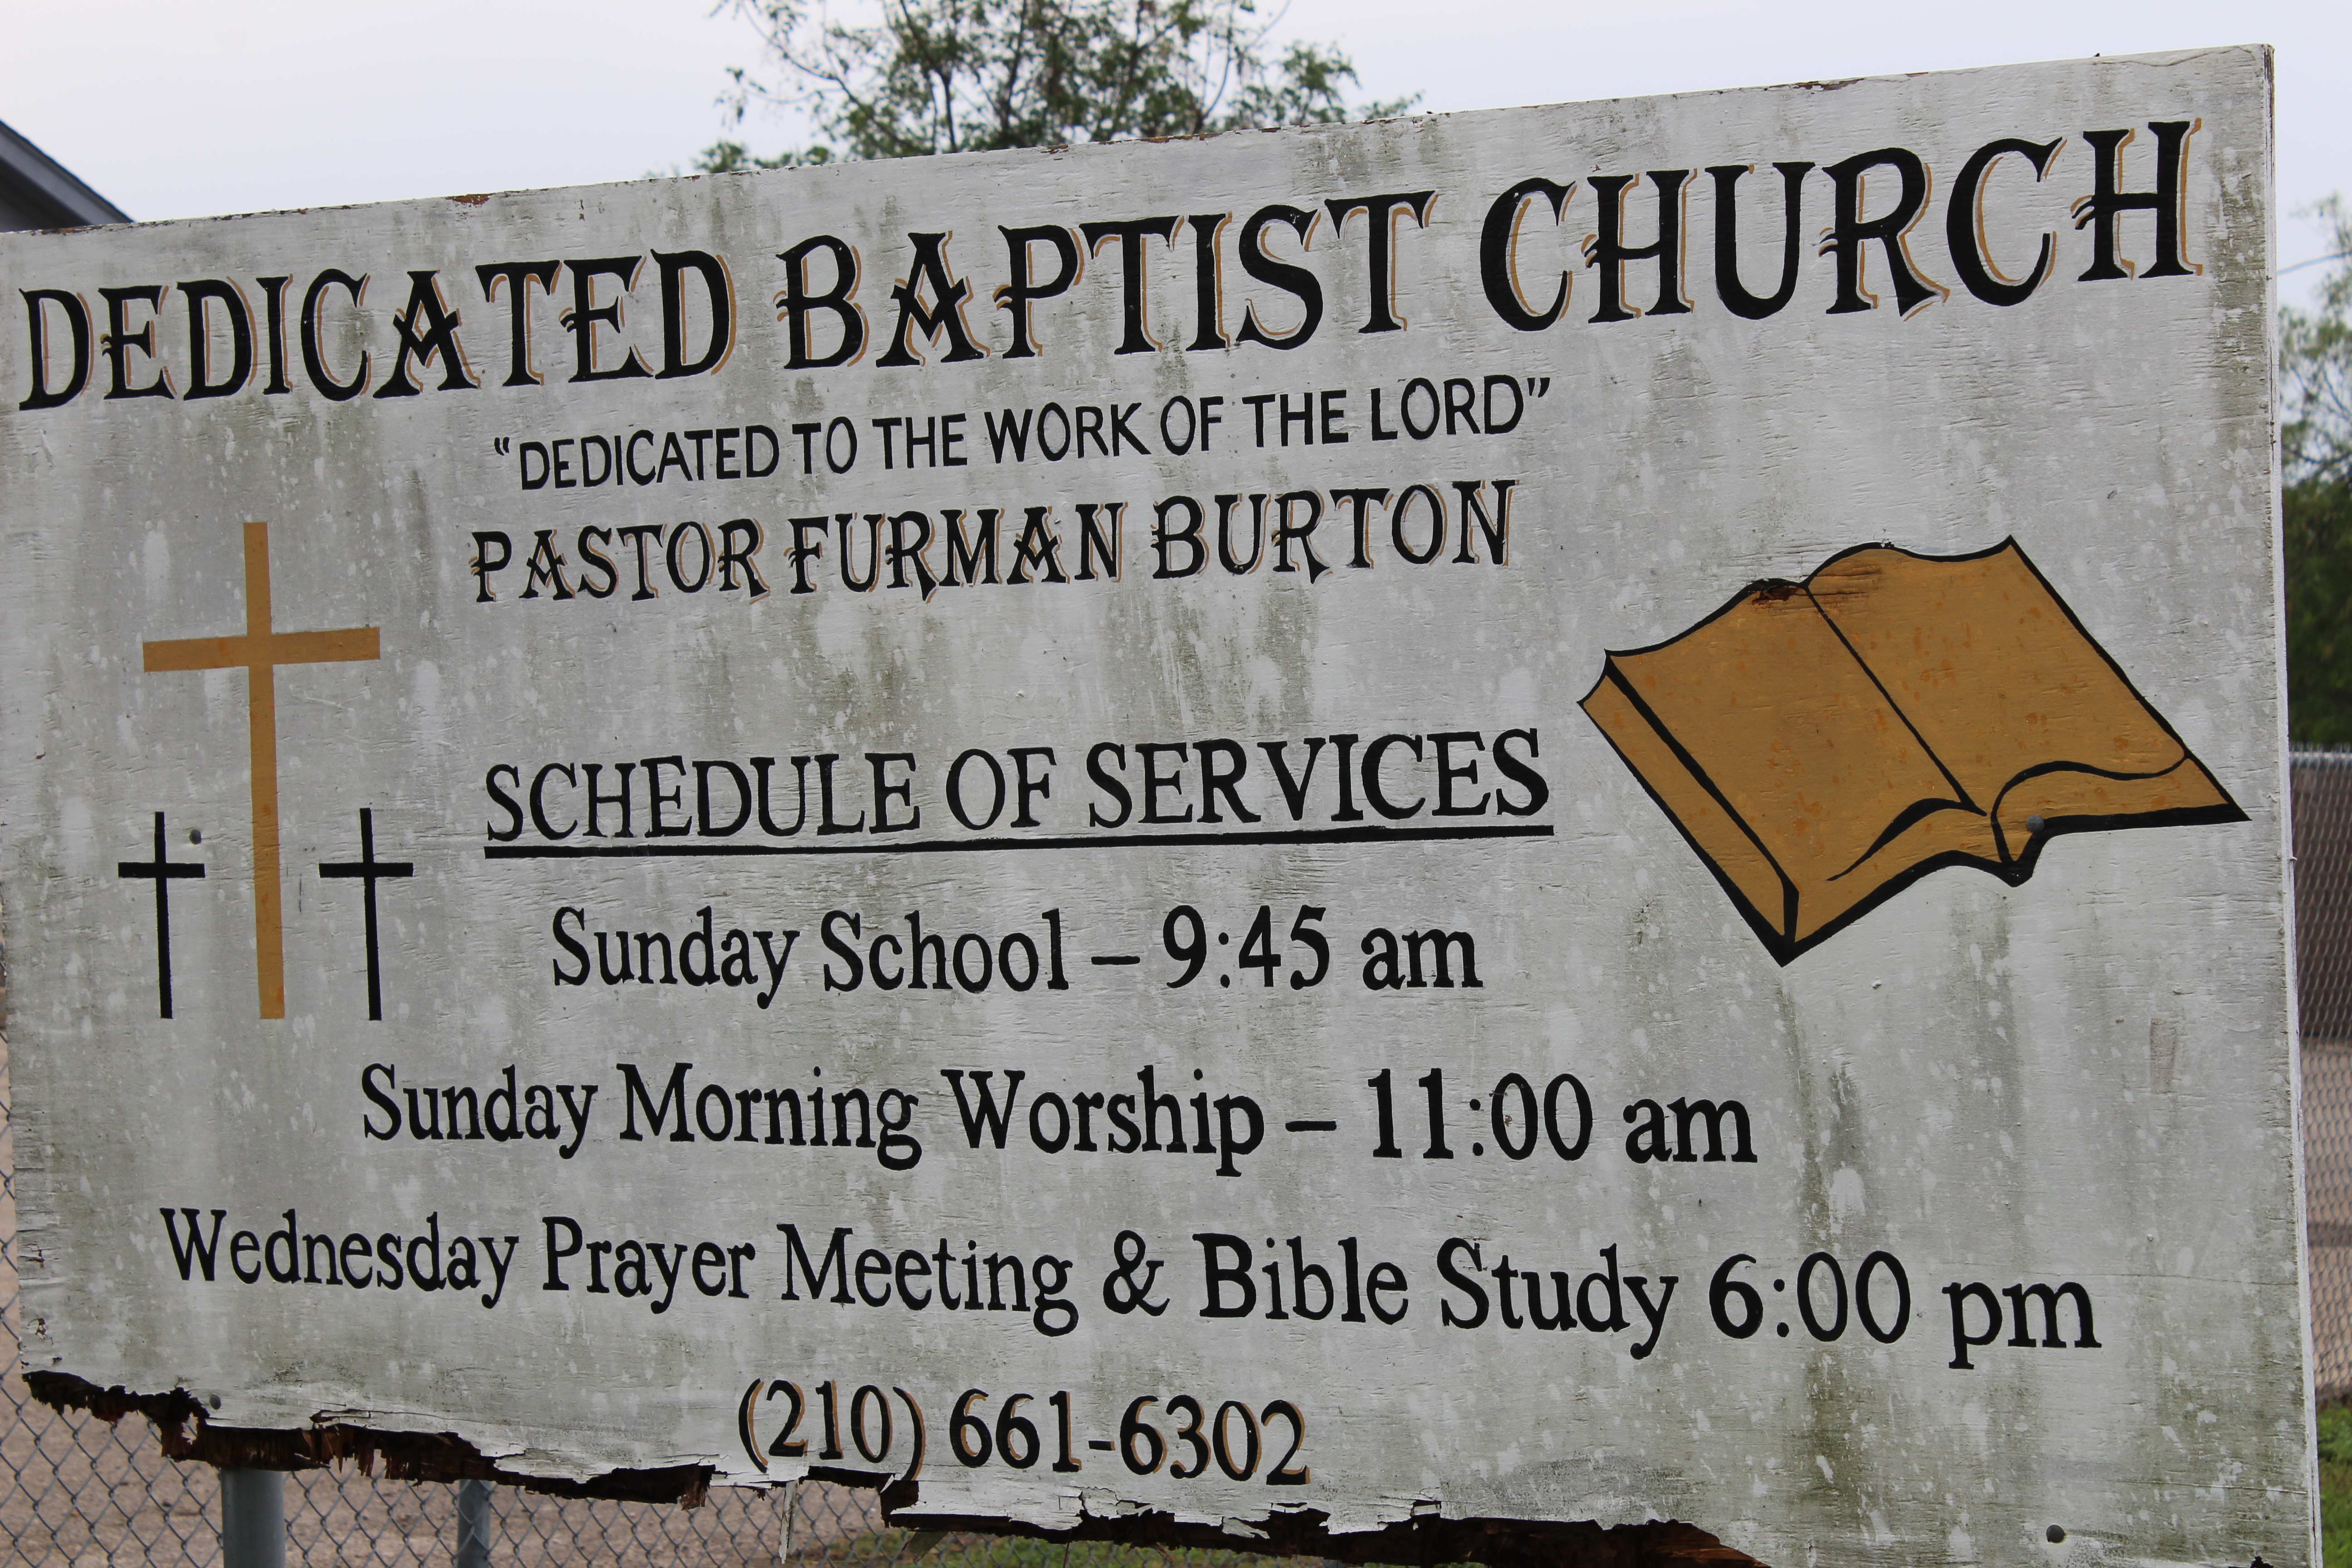 Dedicated Baptist Church in San Antonio Texas